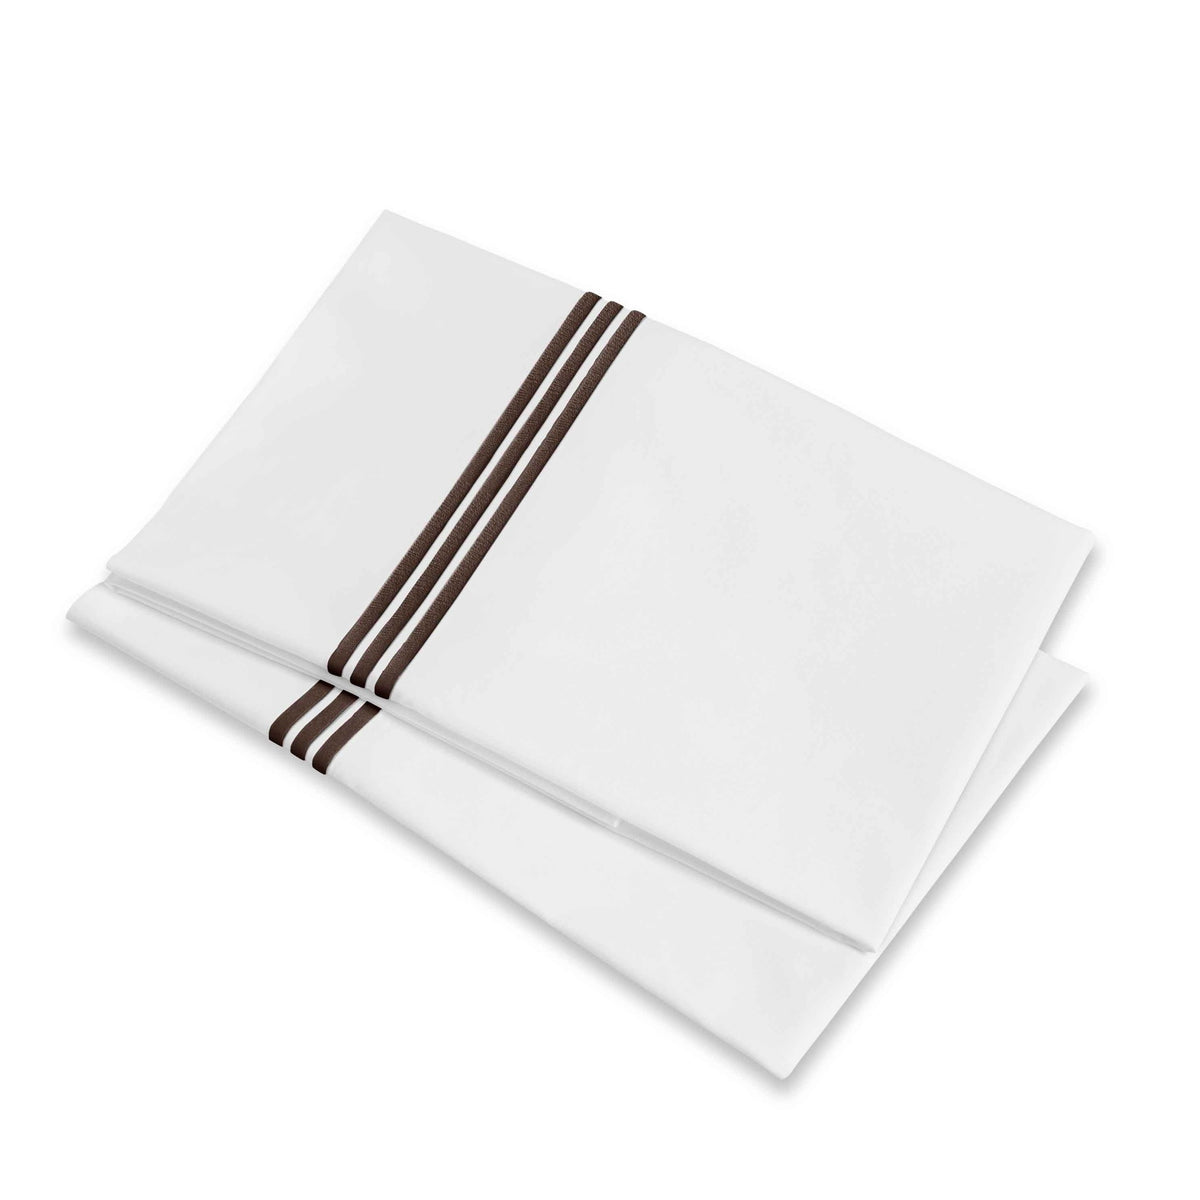 Folded Pillowcases of Signoria Platinum Percale Bedding in White/Espresso Color